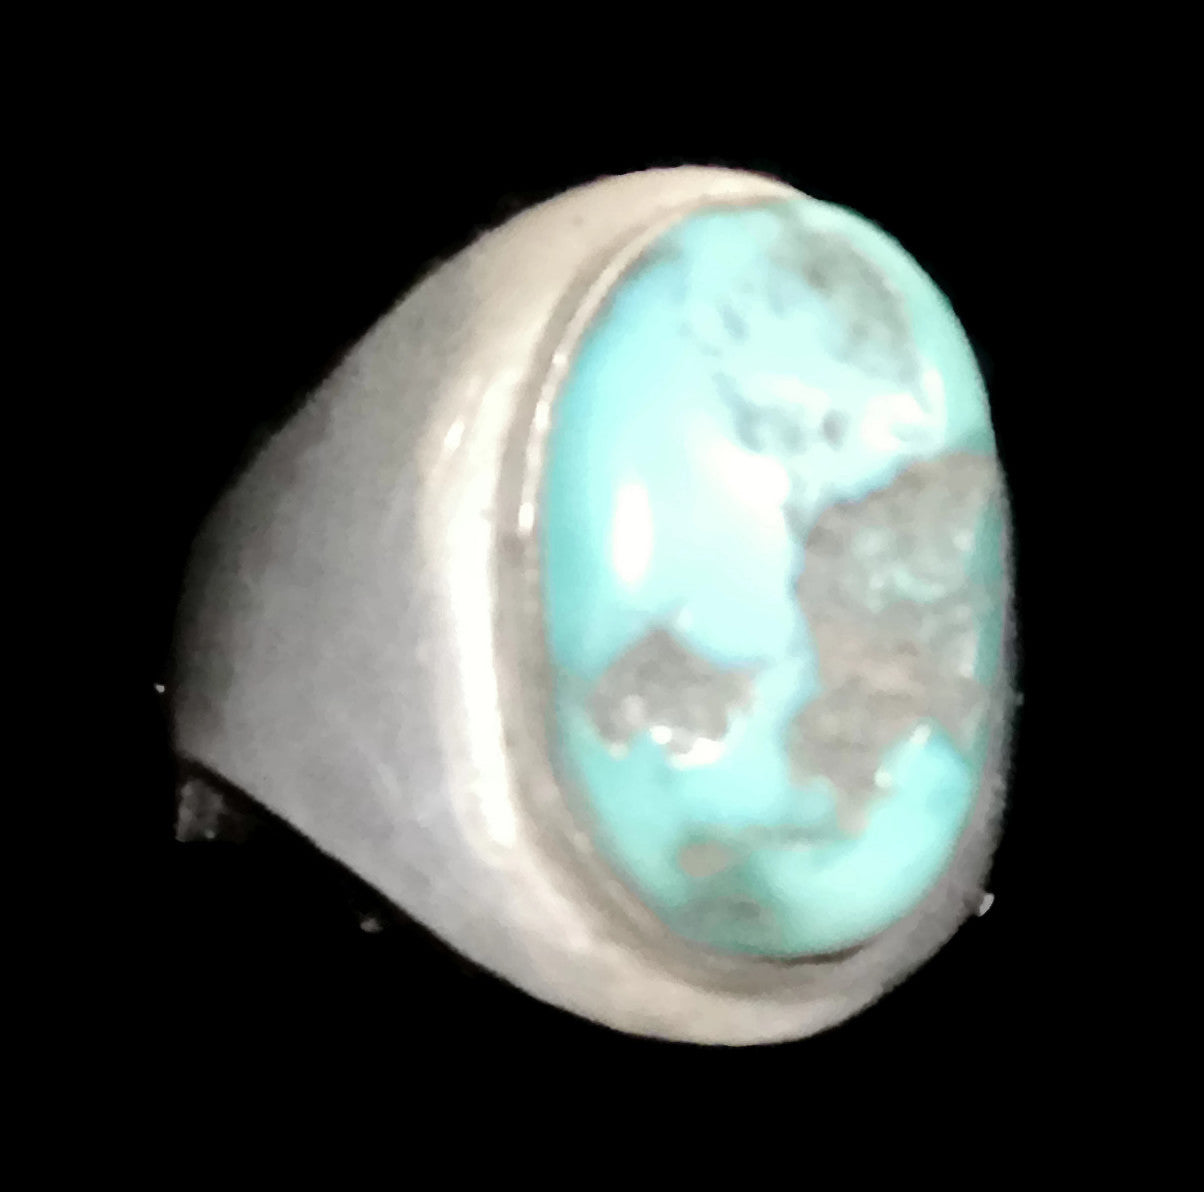 Navajo Turquoise Ring Vintage Sterling Silver Ring Signed JM  Size 6.25